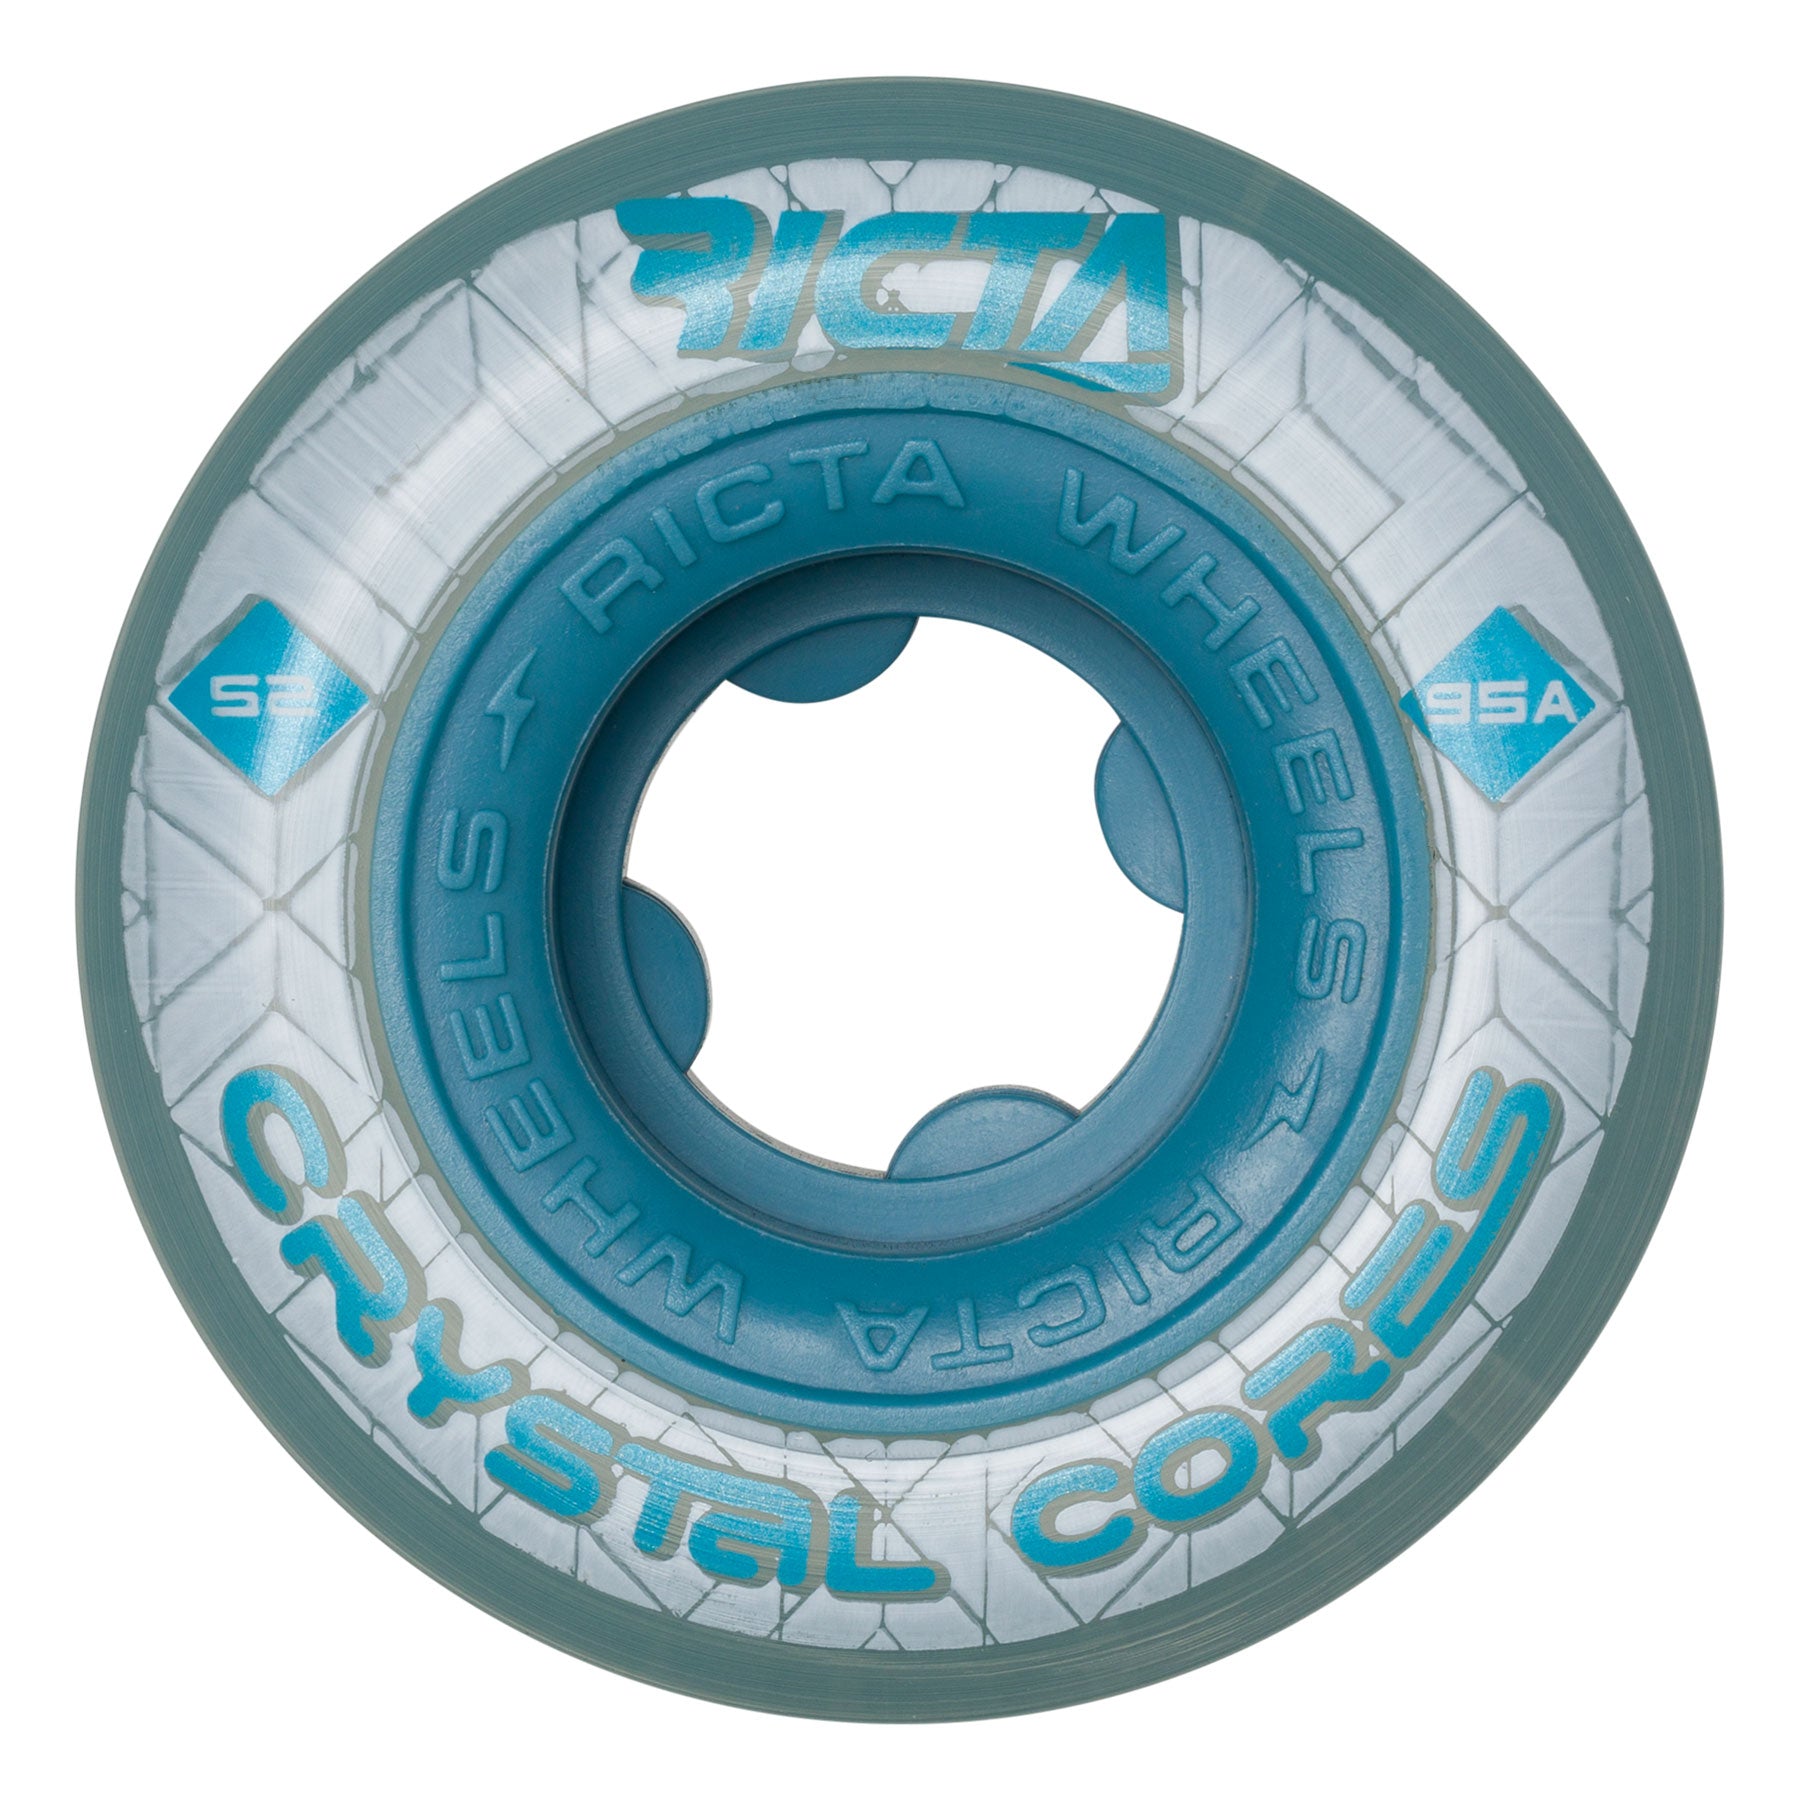 95a Crystal Cores Ricta Skateboard Wheels